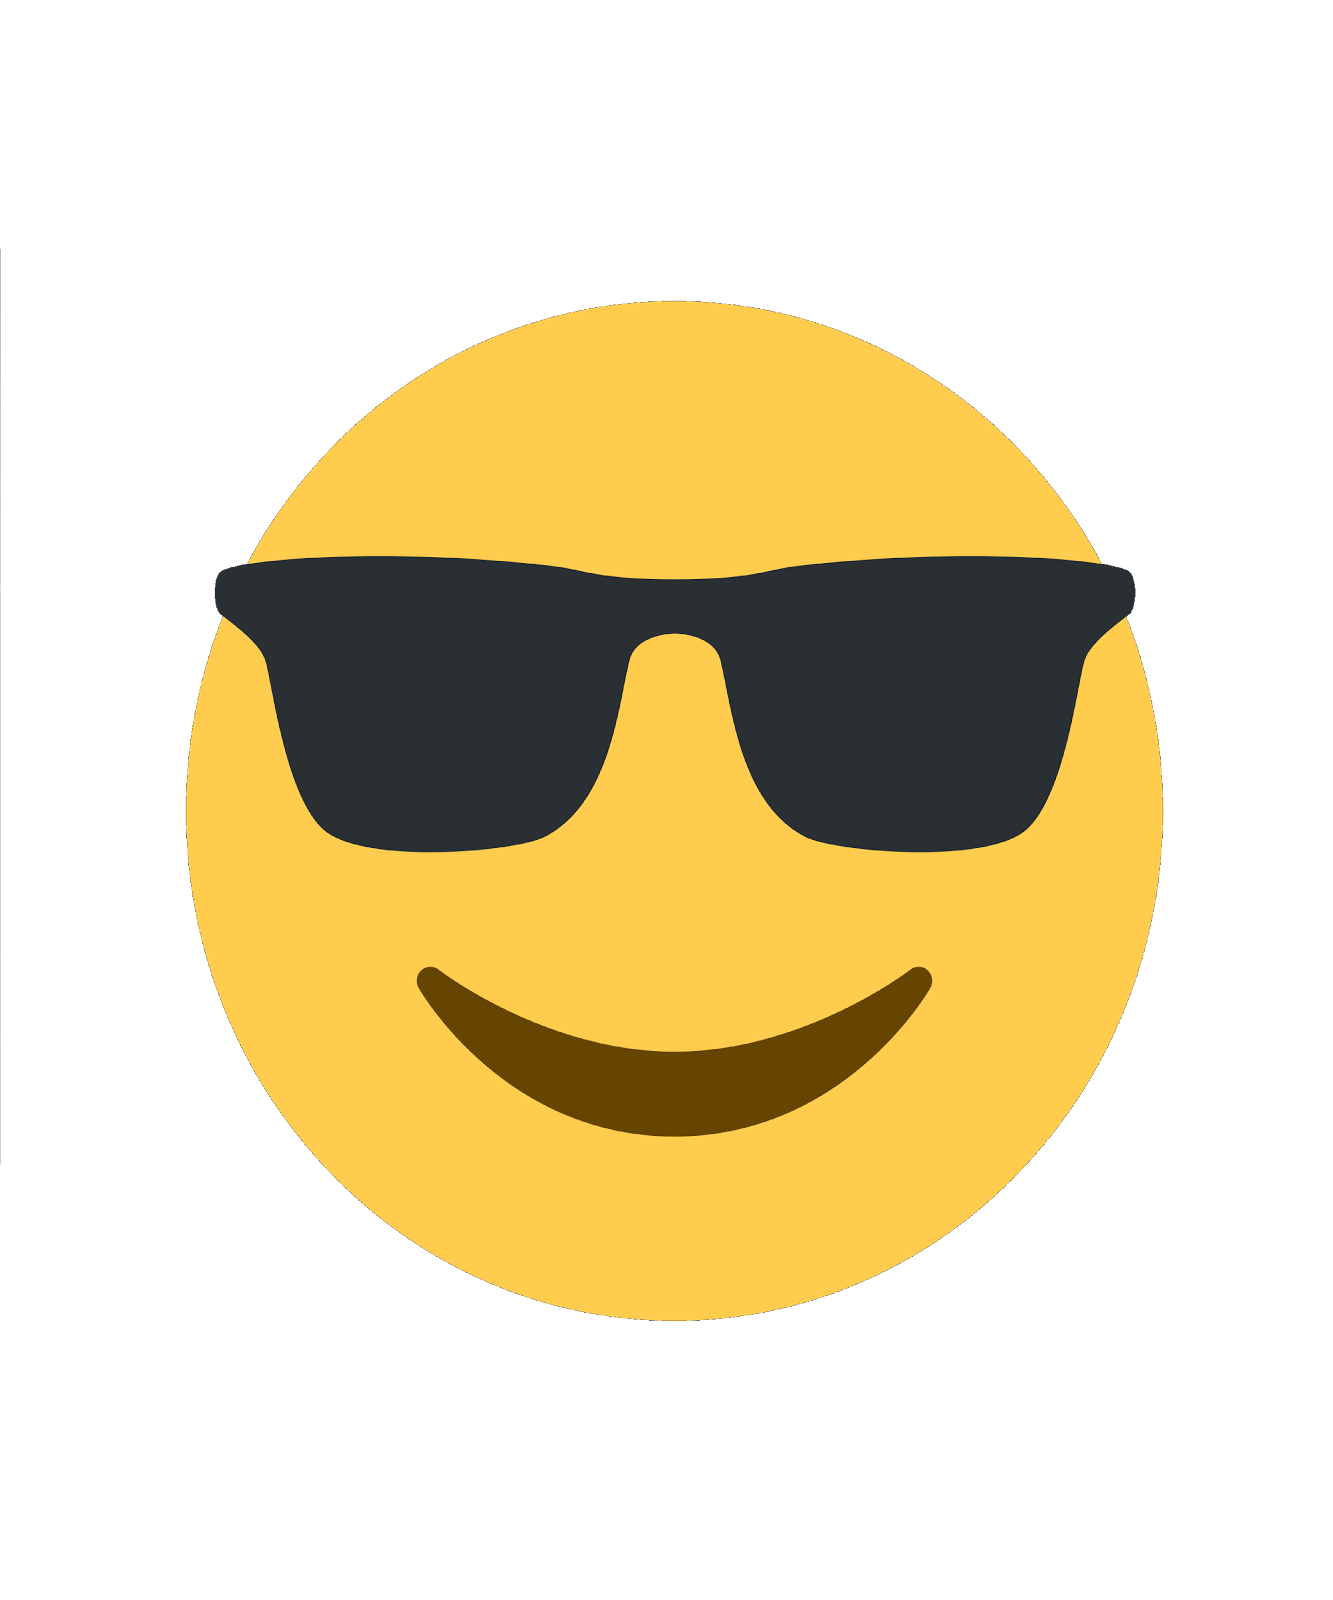 Download Emoticon Sunglasses Smiley Iphone Go Emoji HQ PNG Image |  FreePNGImg